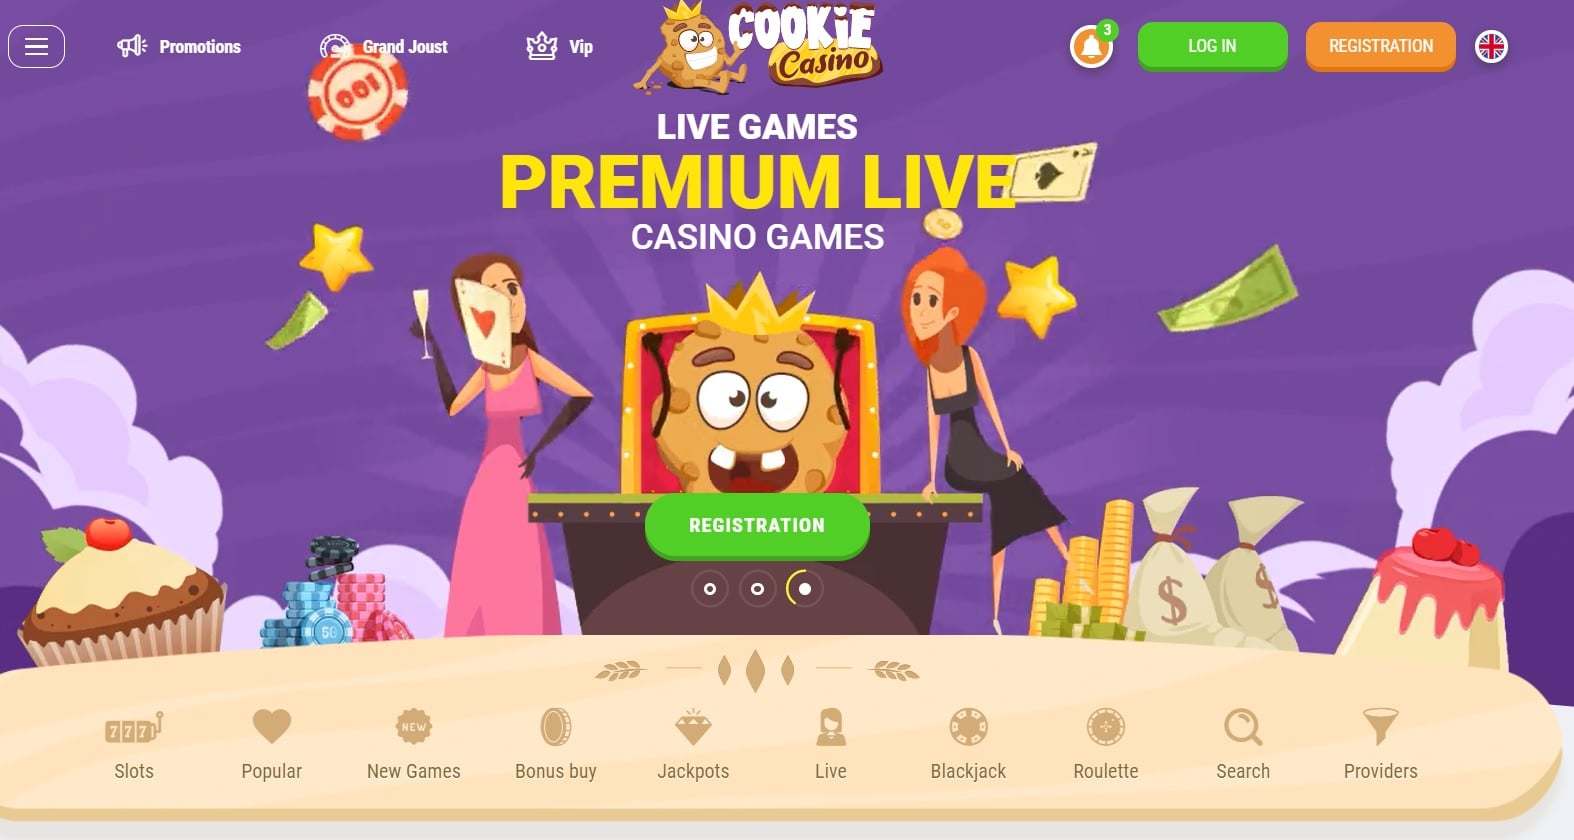 Cookie Spielbank premium live casino games